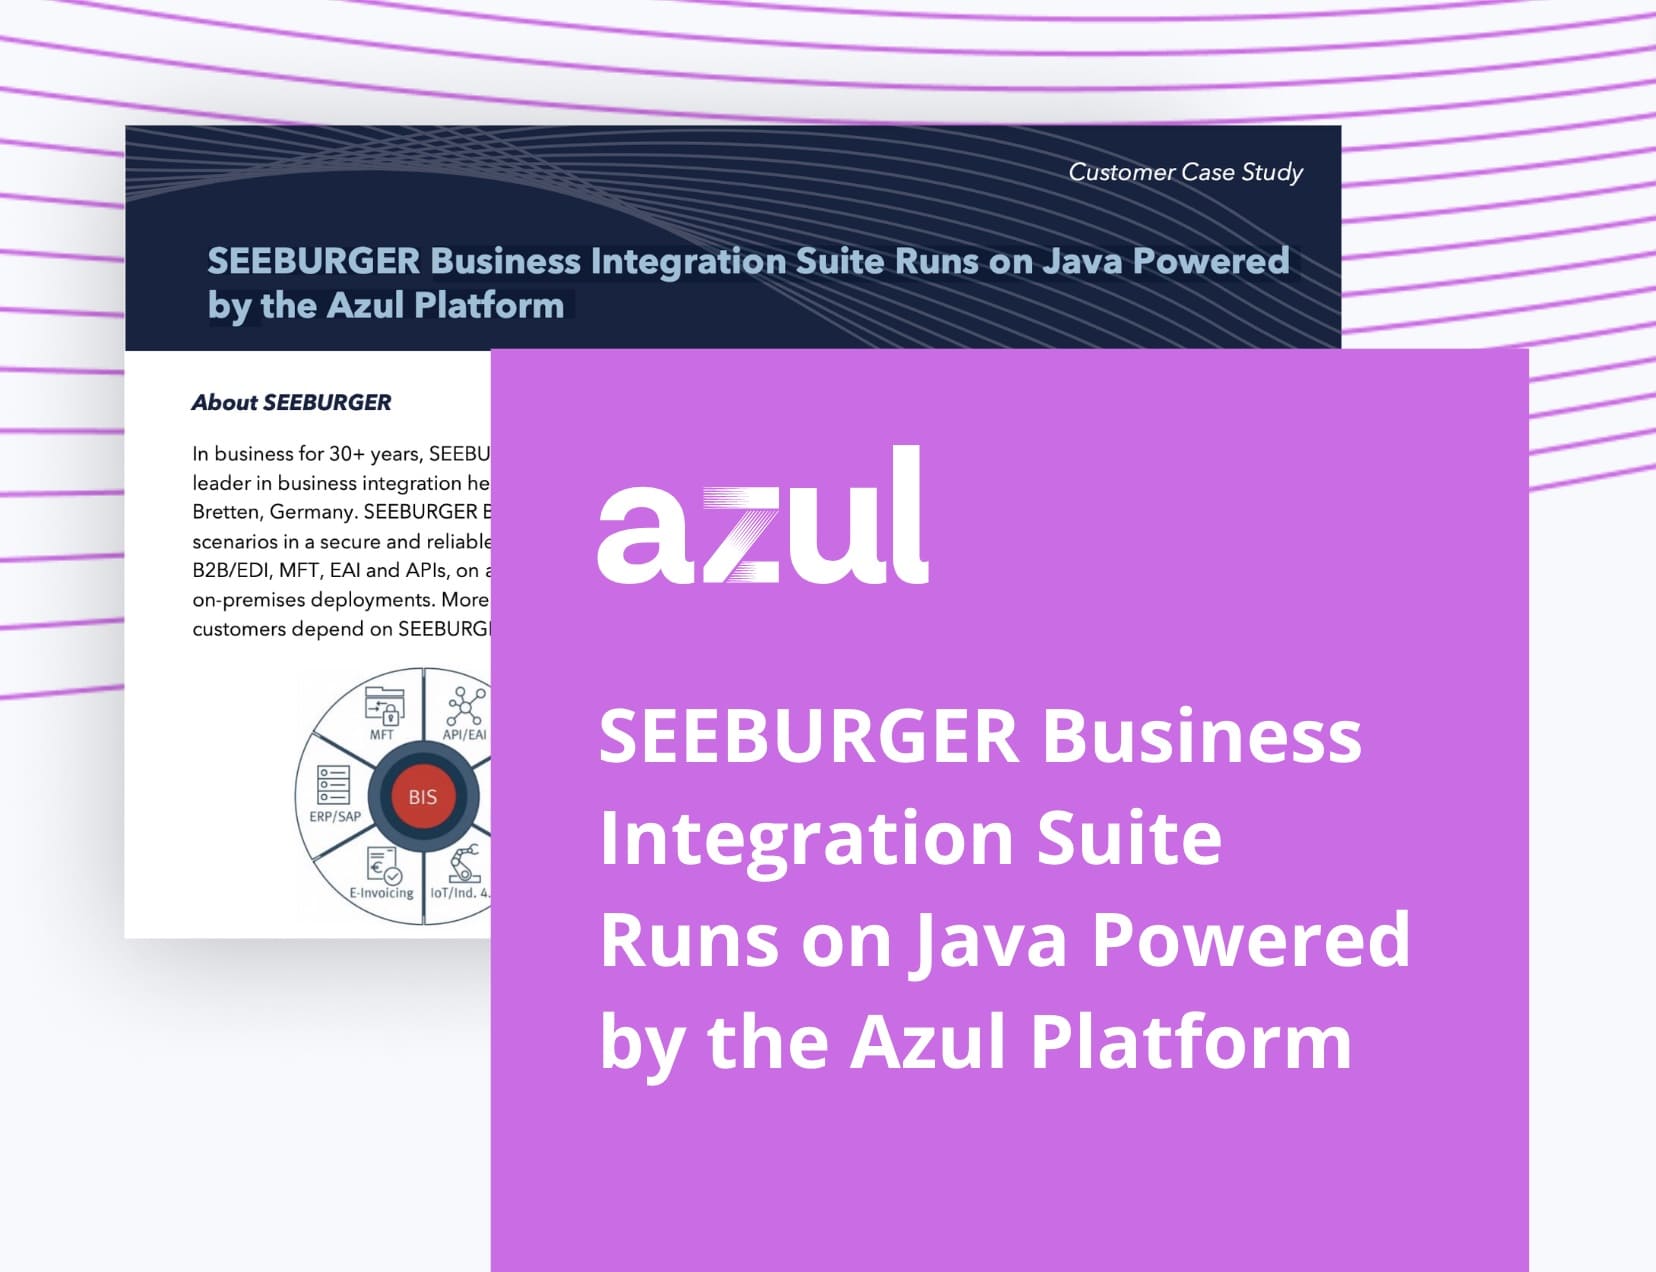 SEEBURGER Business Integration Suite Runs on Java Powered by the Azul Platform